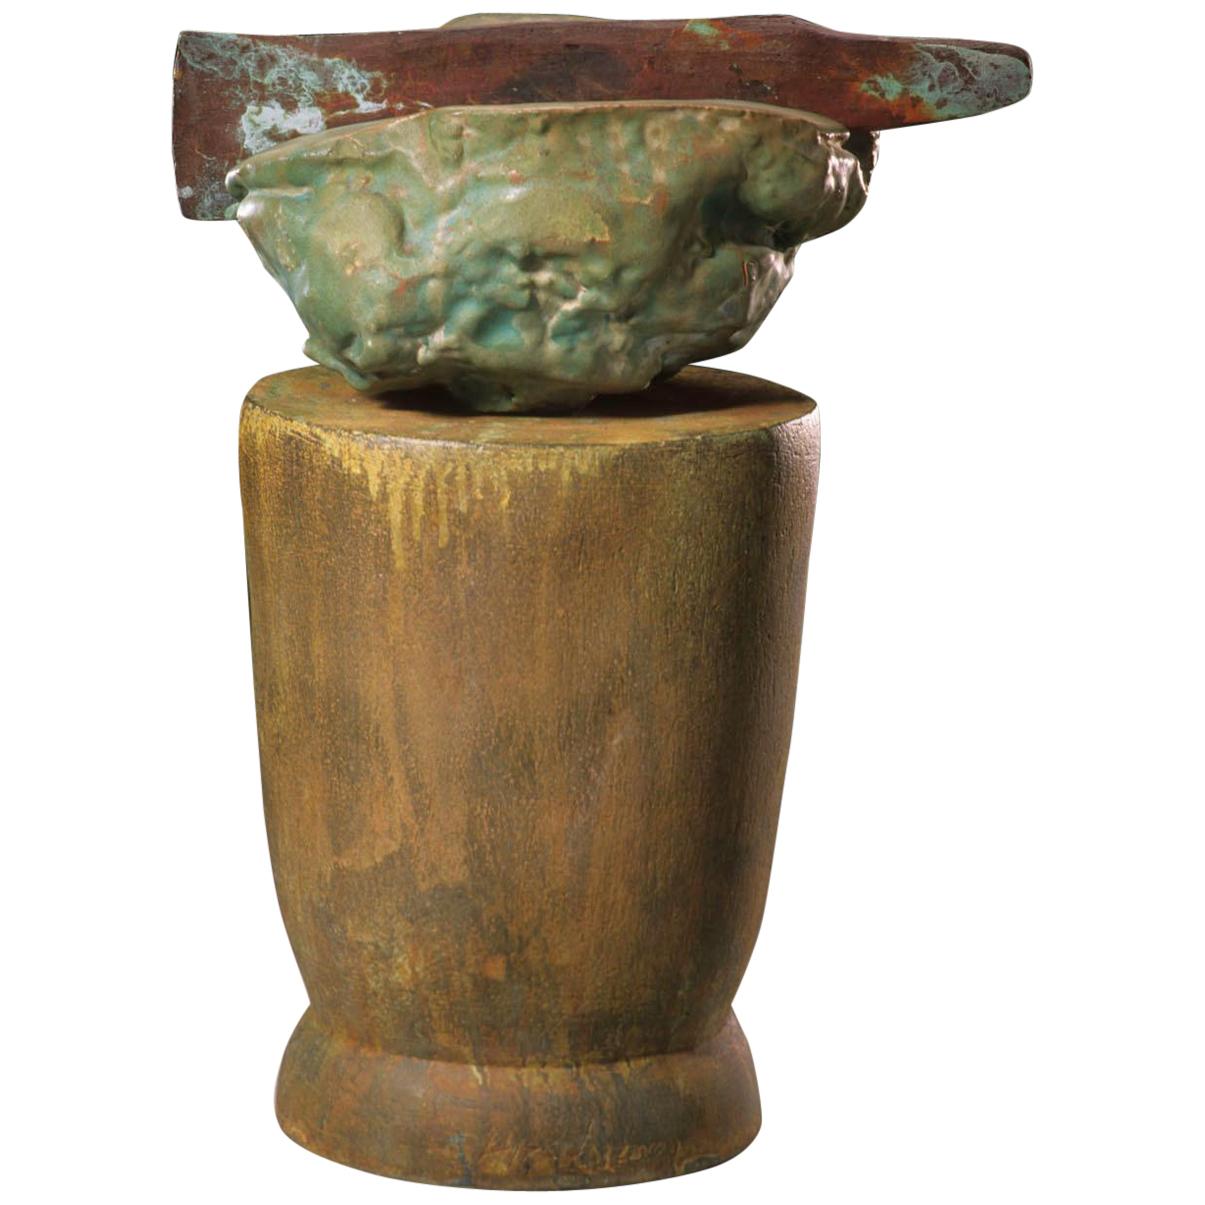 Richard Hirsch Ceramic Altar Bowl with Weapon Sculpture, 2000